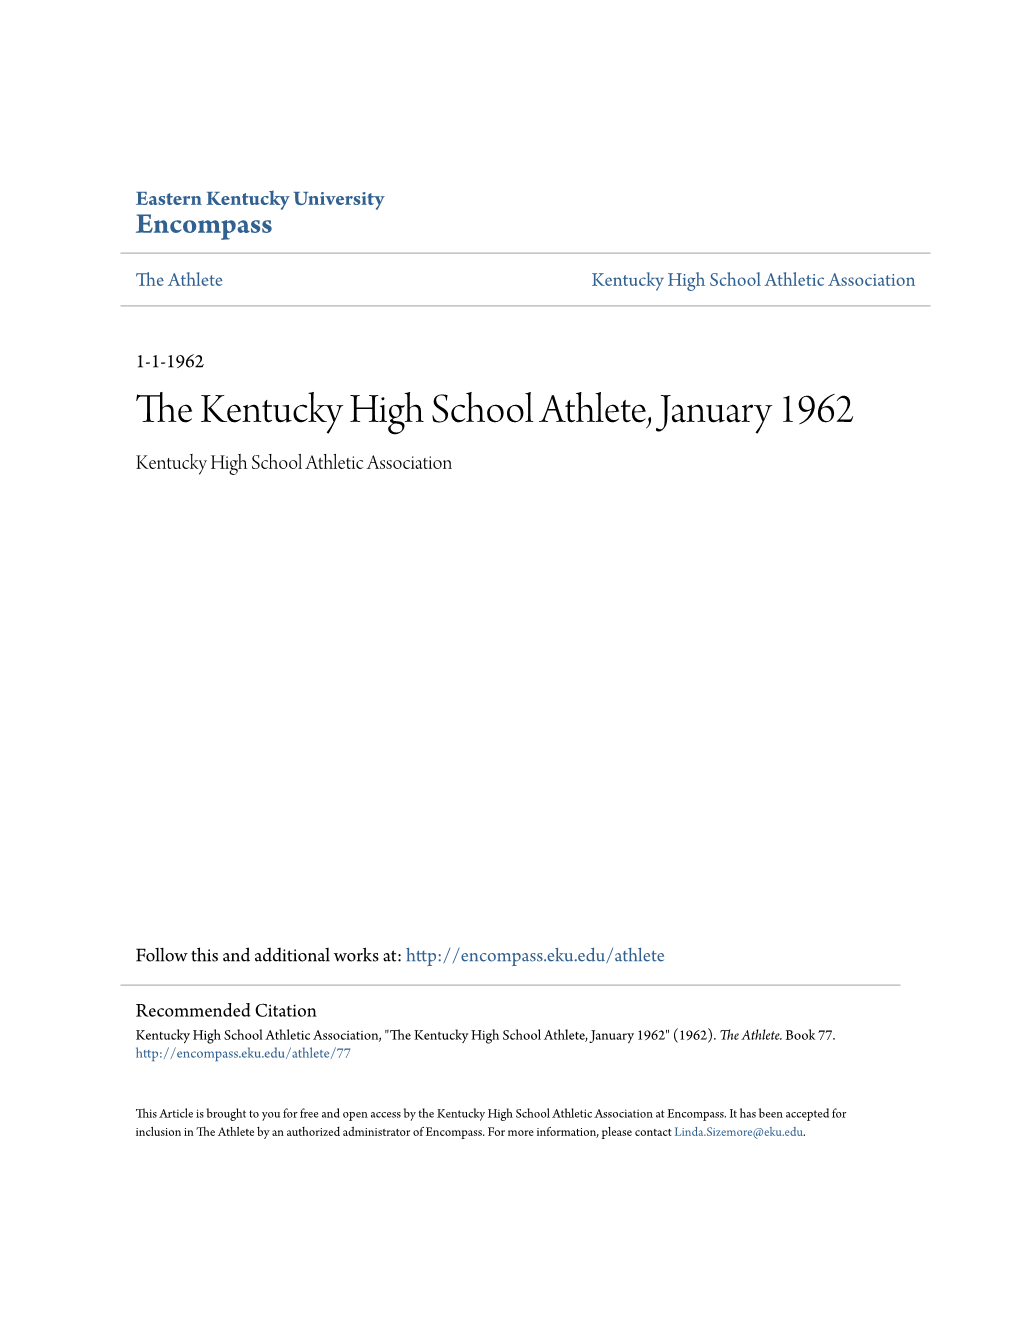 The Kentucky High School Athlete, January 1962 Kentucky High School Athletic Association